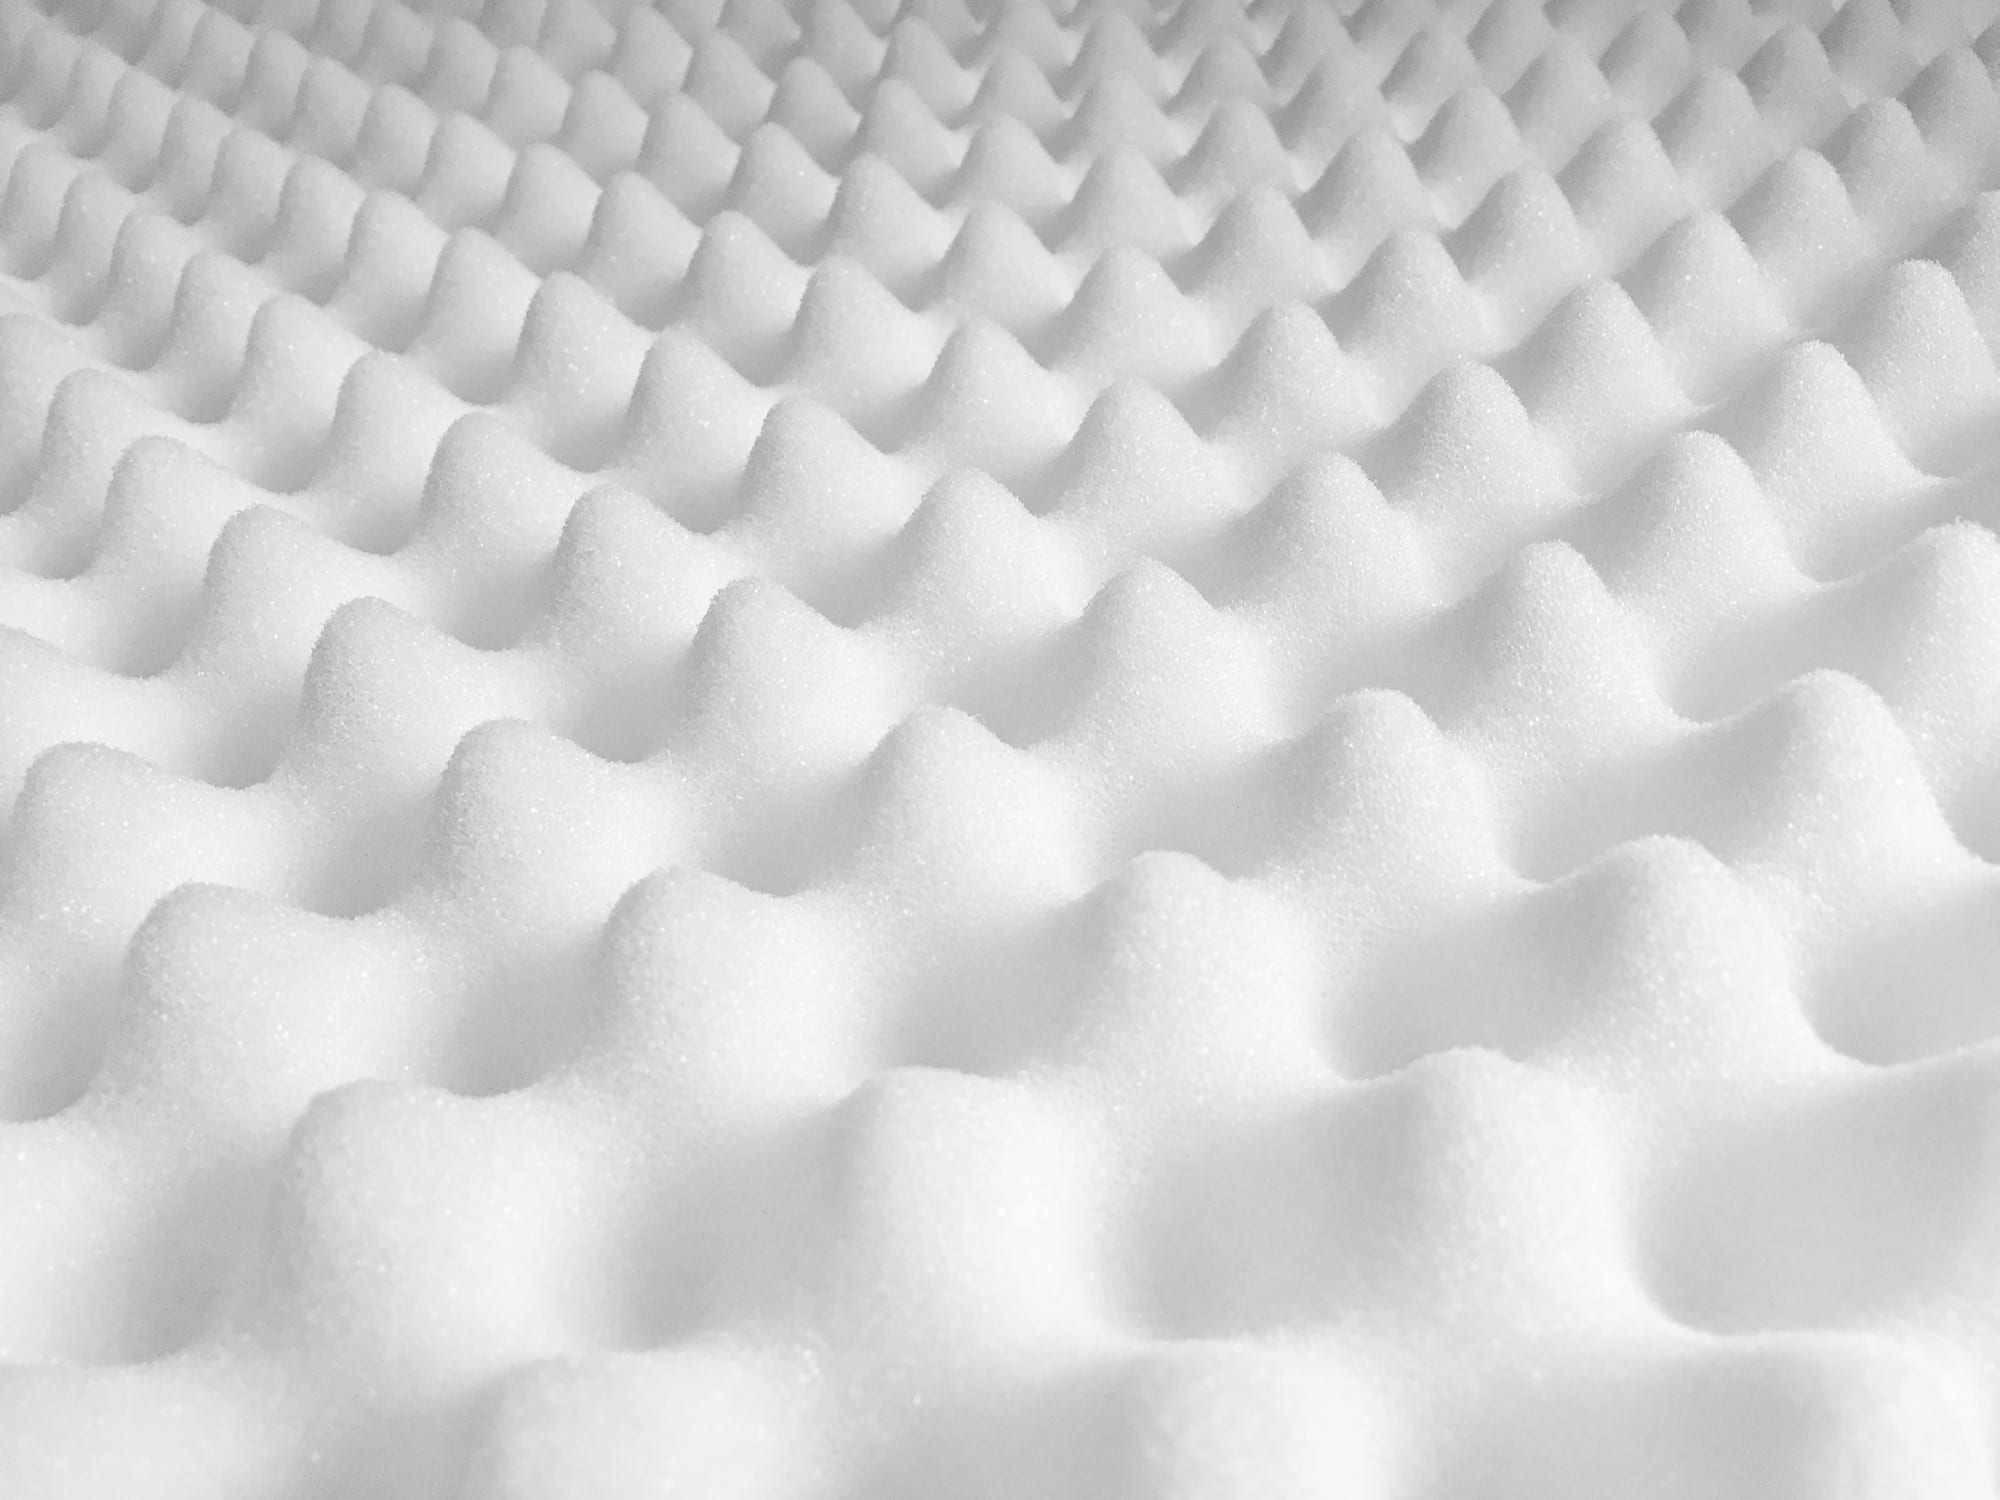 egg crate memory foam mattress for cot